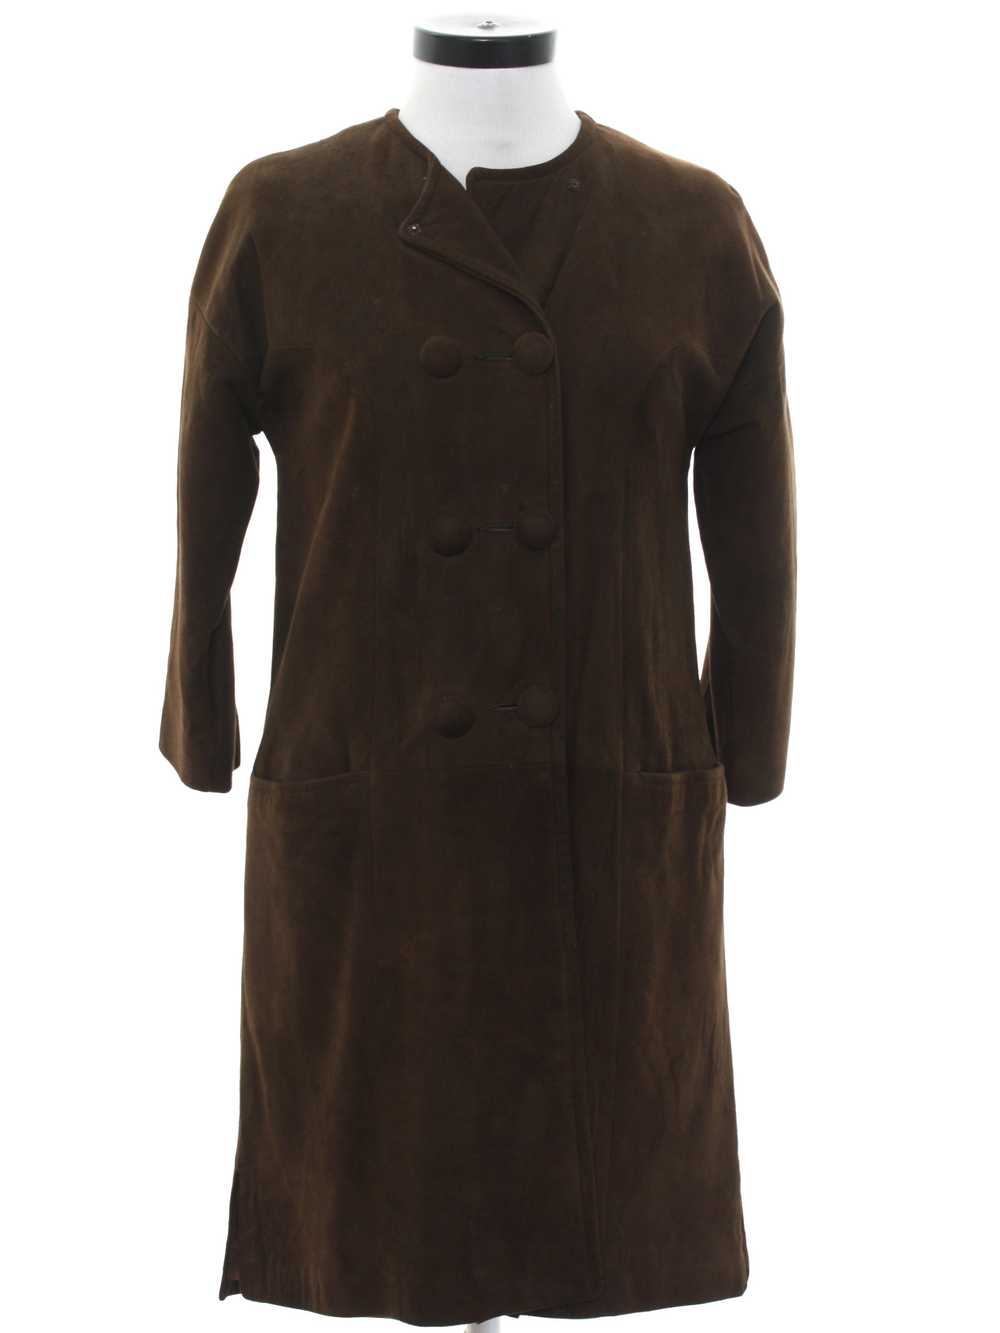 1960's Womens Leather Duster Coat Jacket - image 1